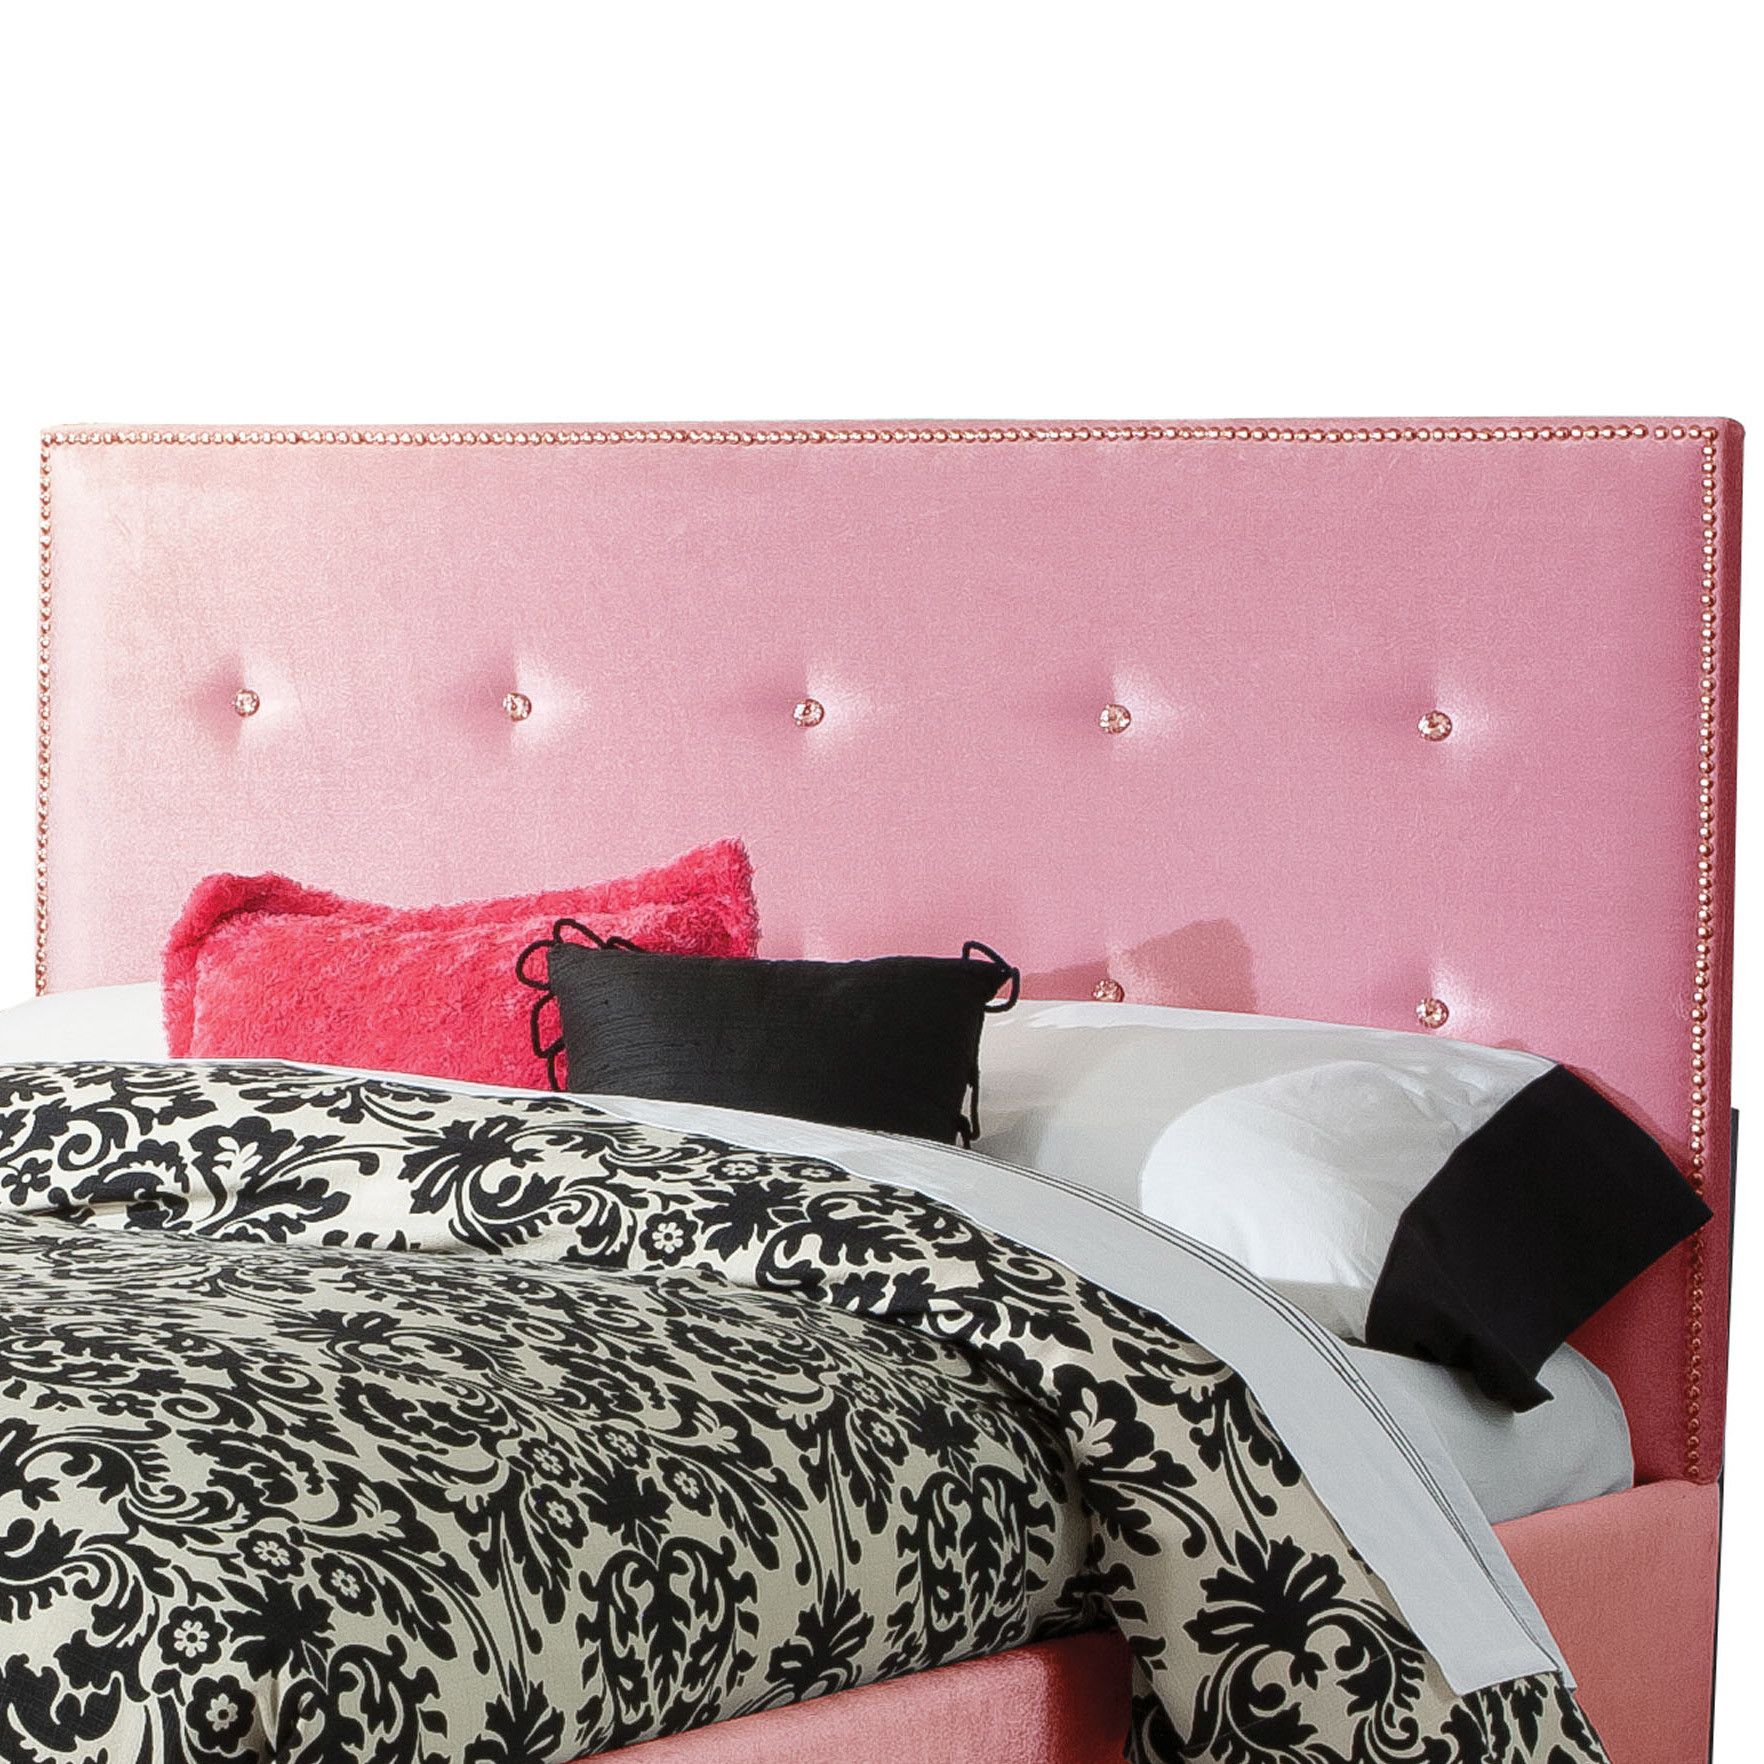 Pink Bedding Black Leather Headboard